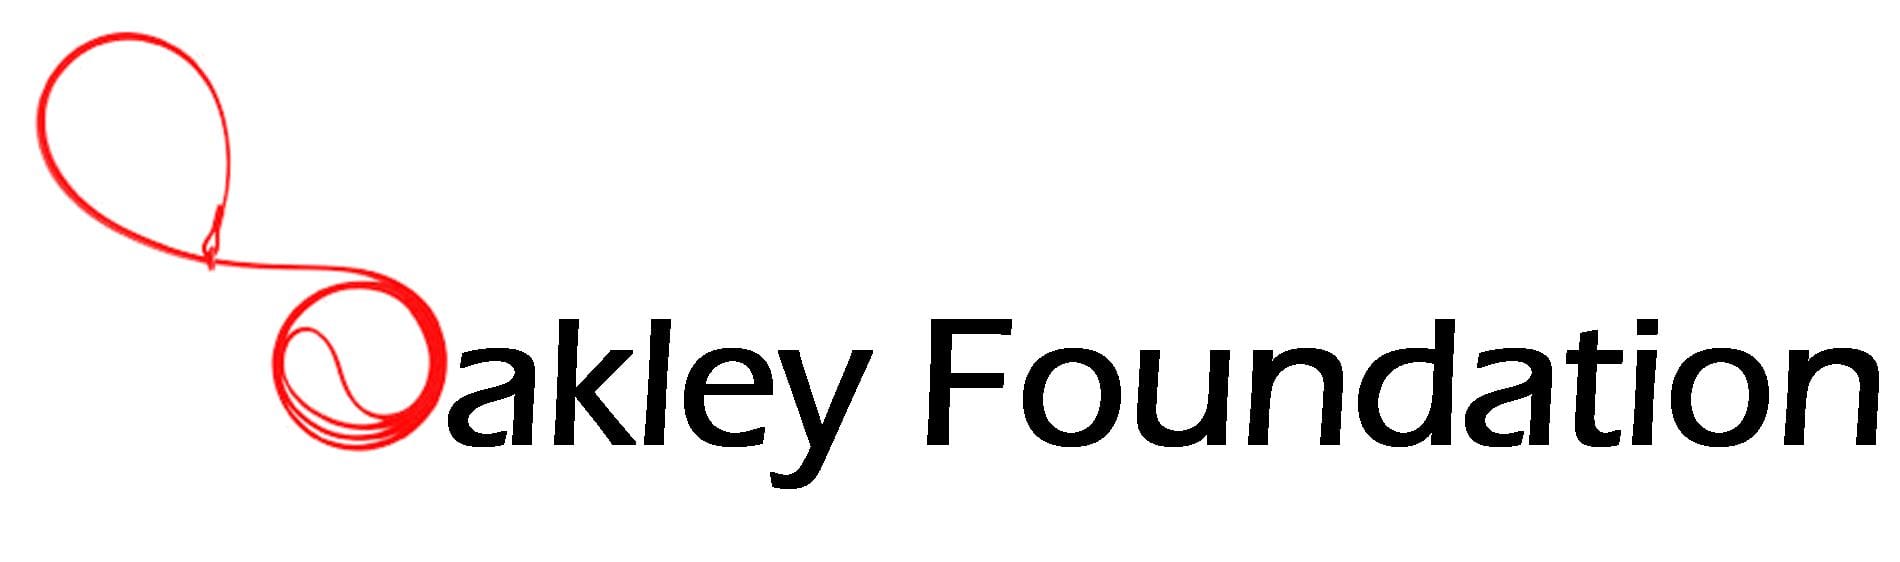 Oakley-Foundation